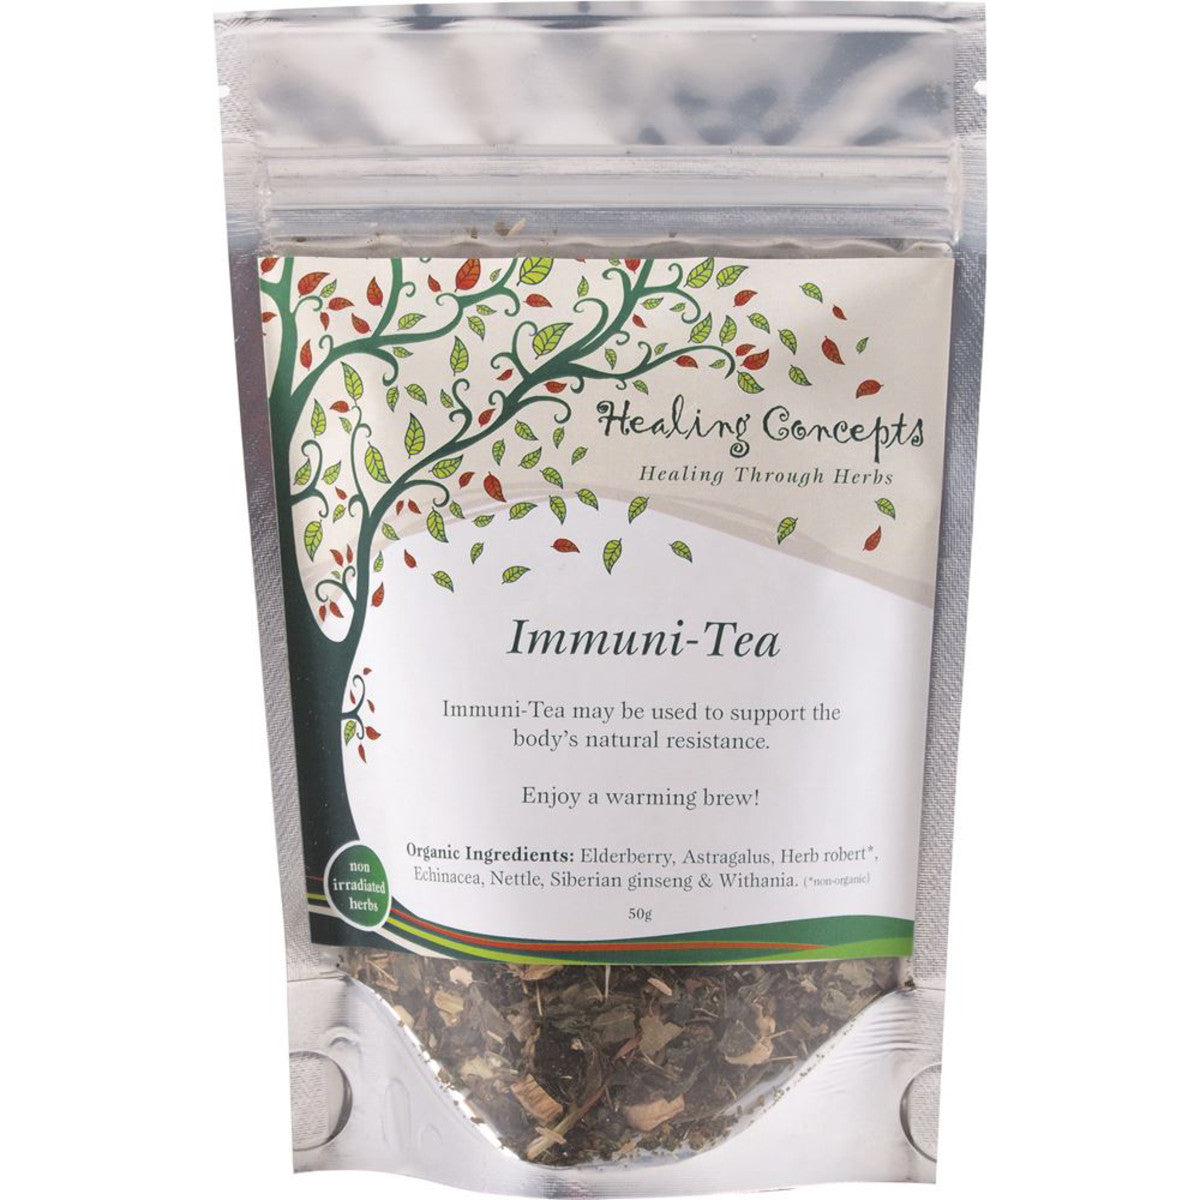 Healing Concepts Immuni-Tea 50g, Certified Organic